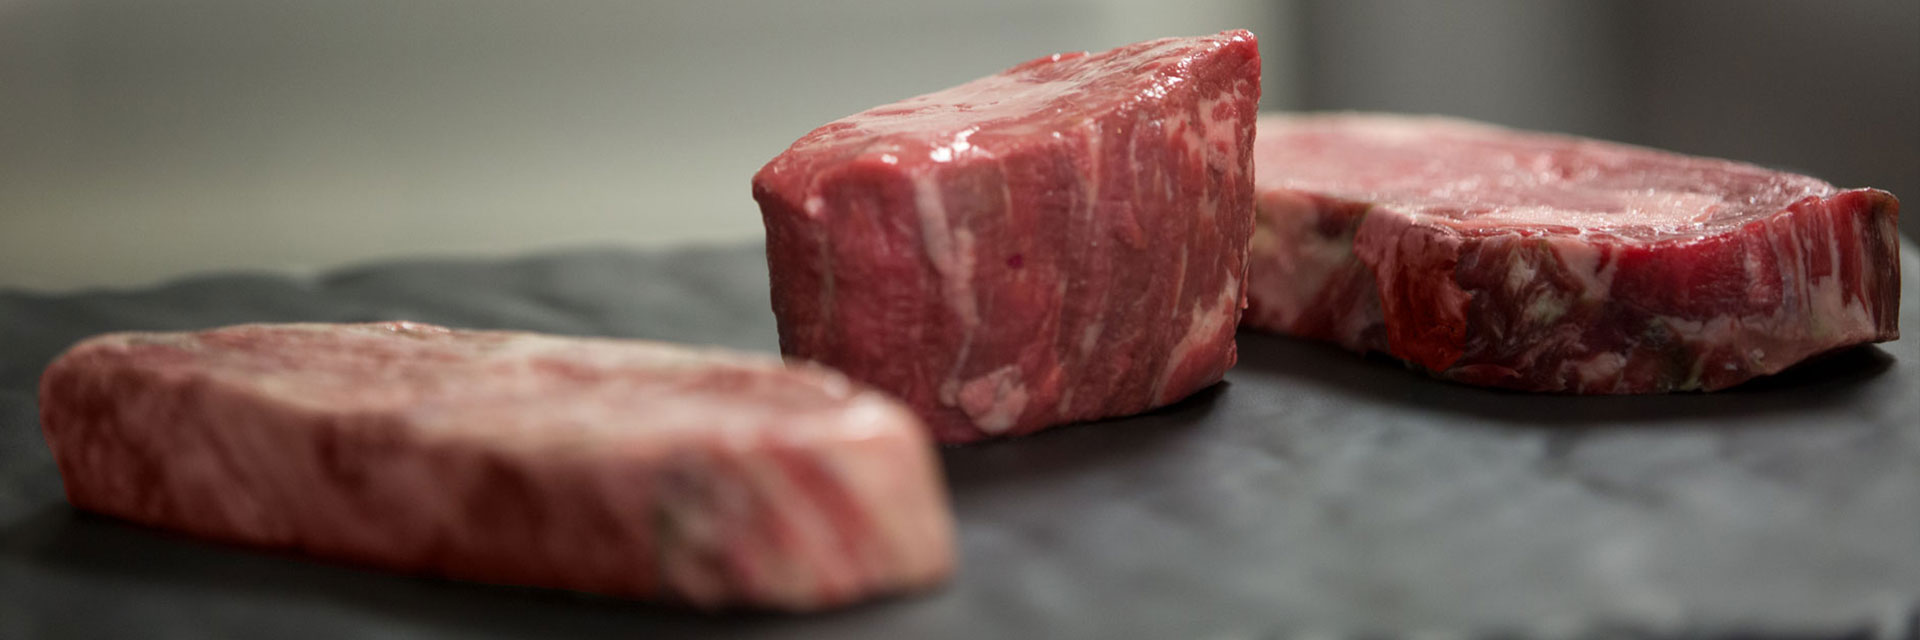 raw-steaks-horizontal.jpg